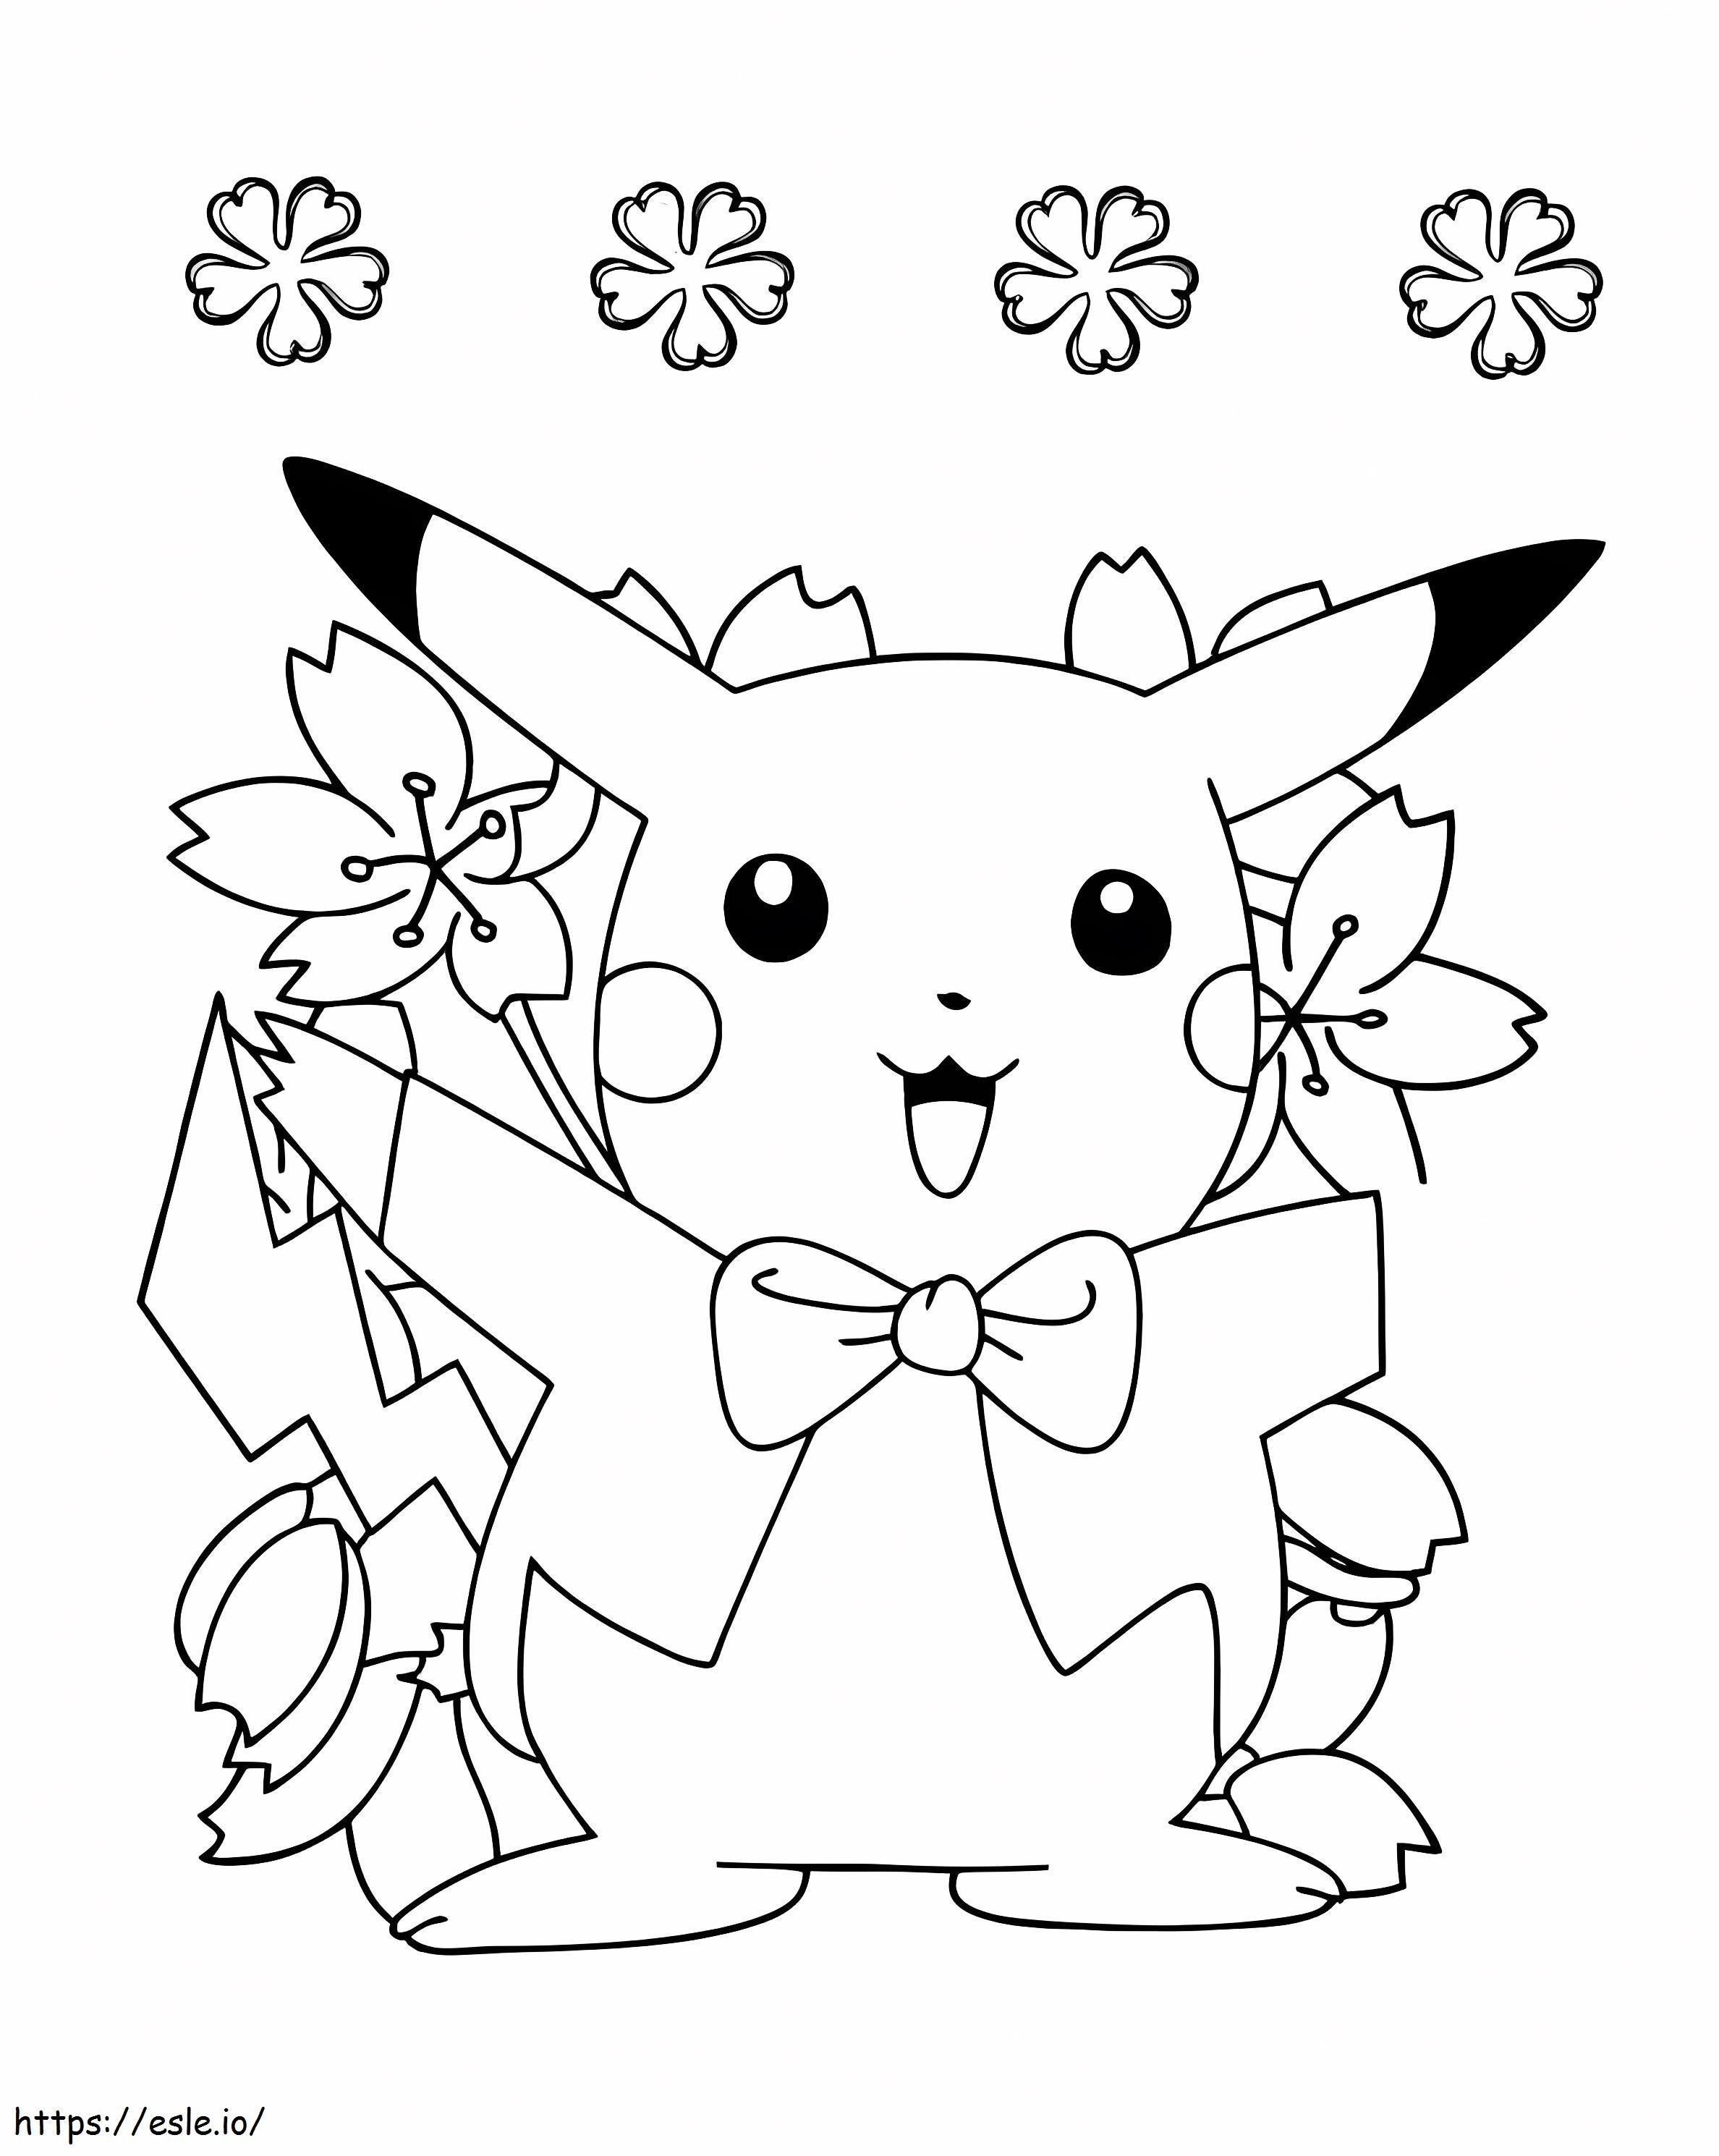 Super Pikachu coloring page